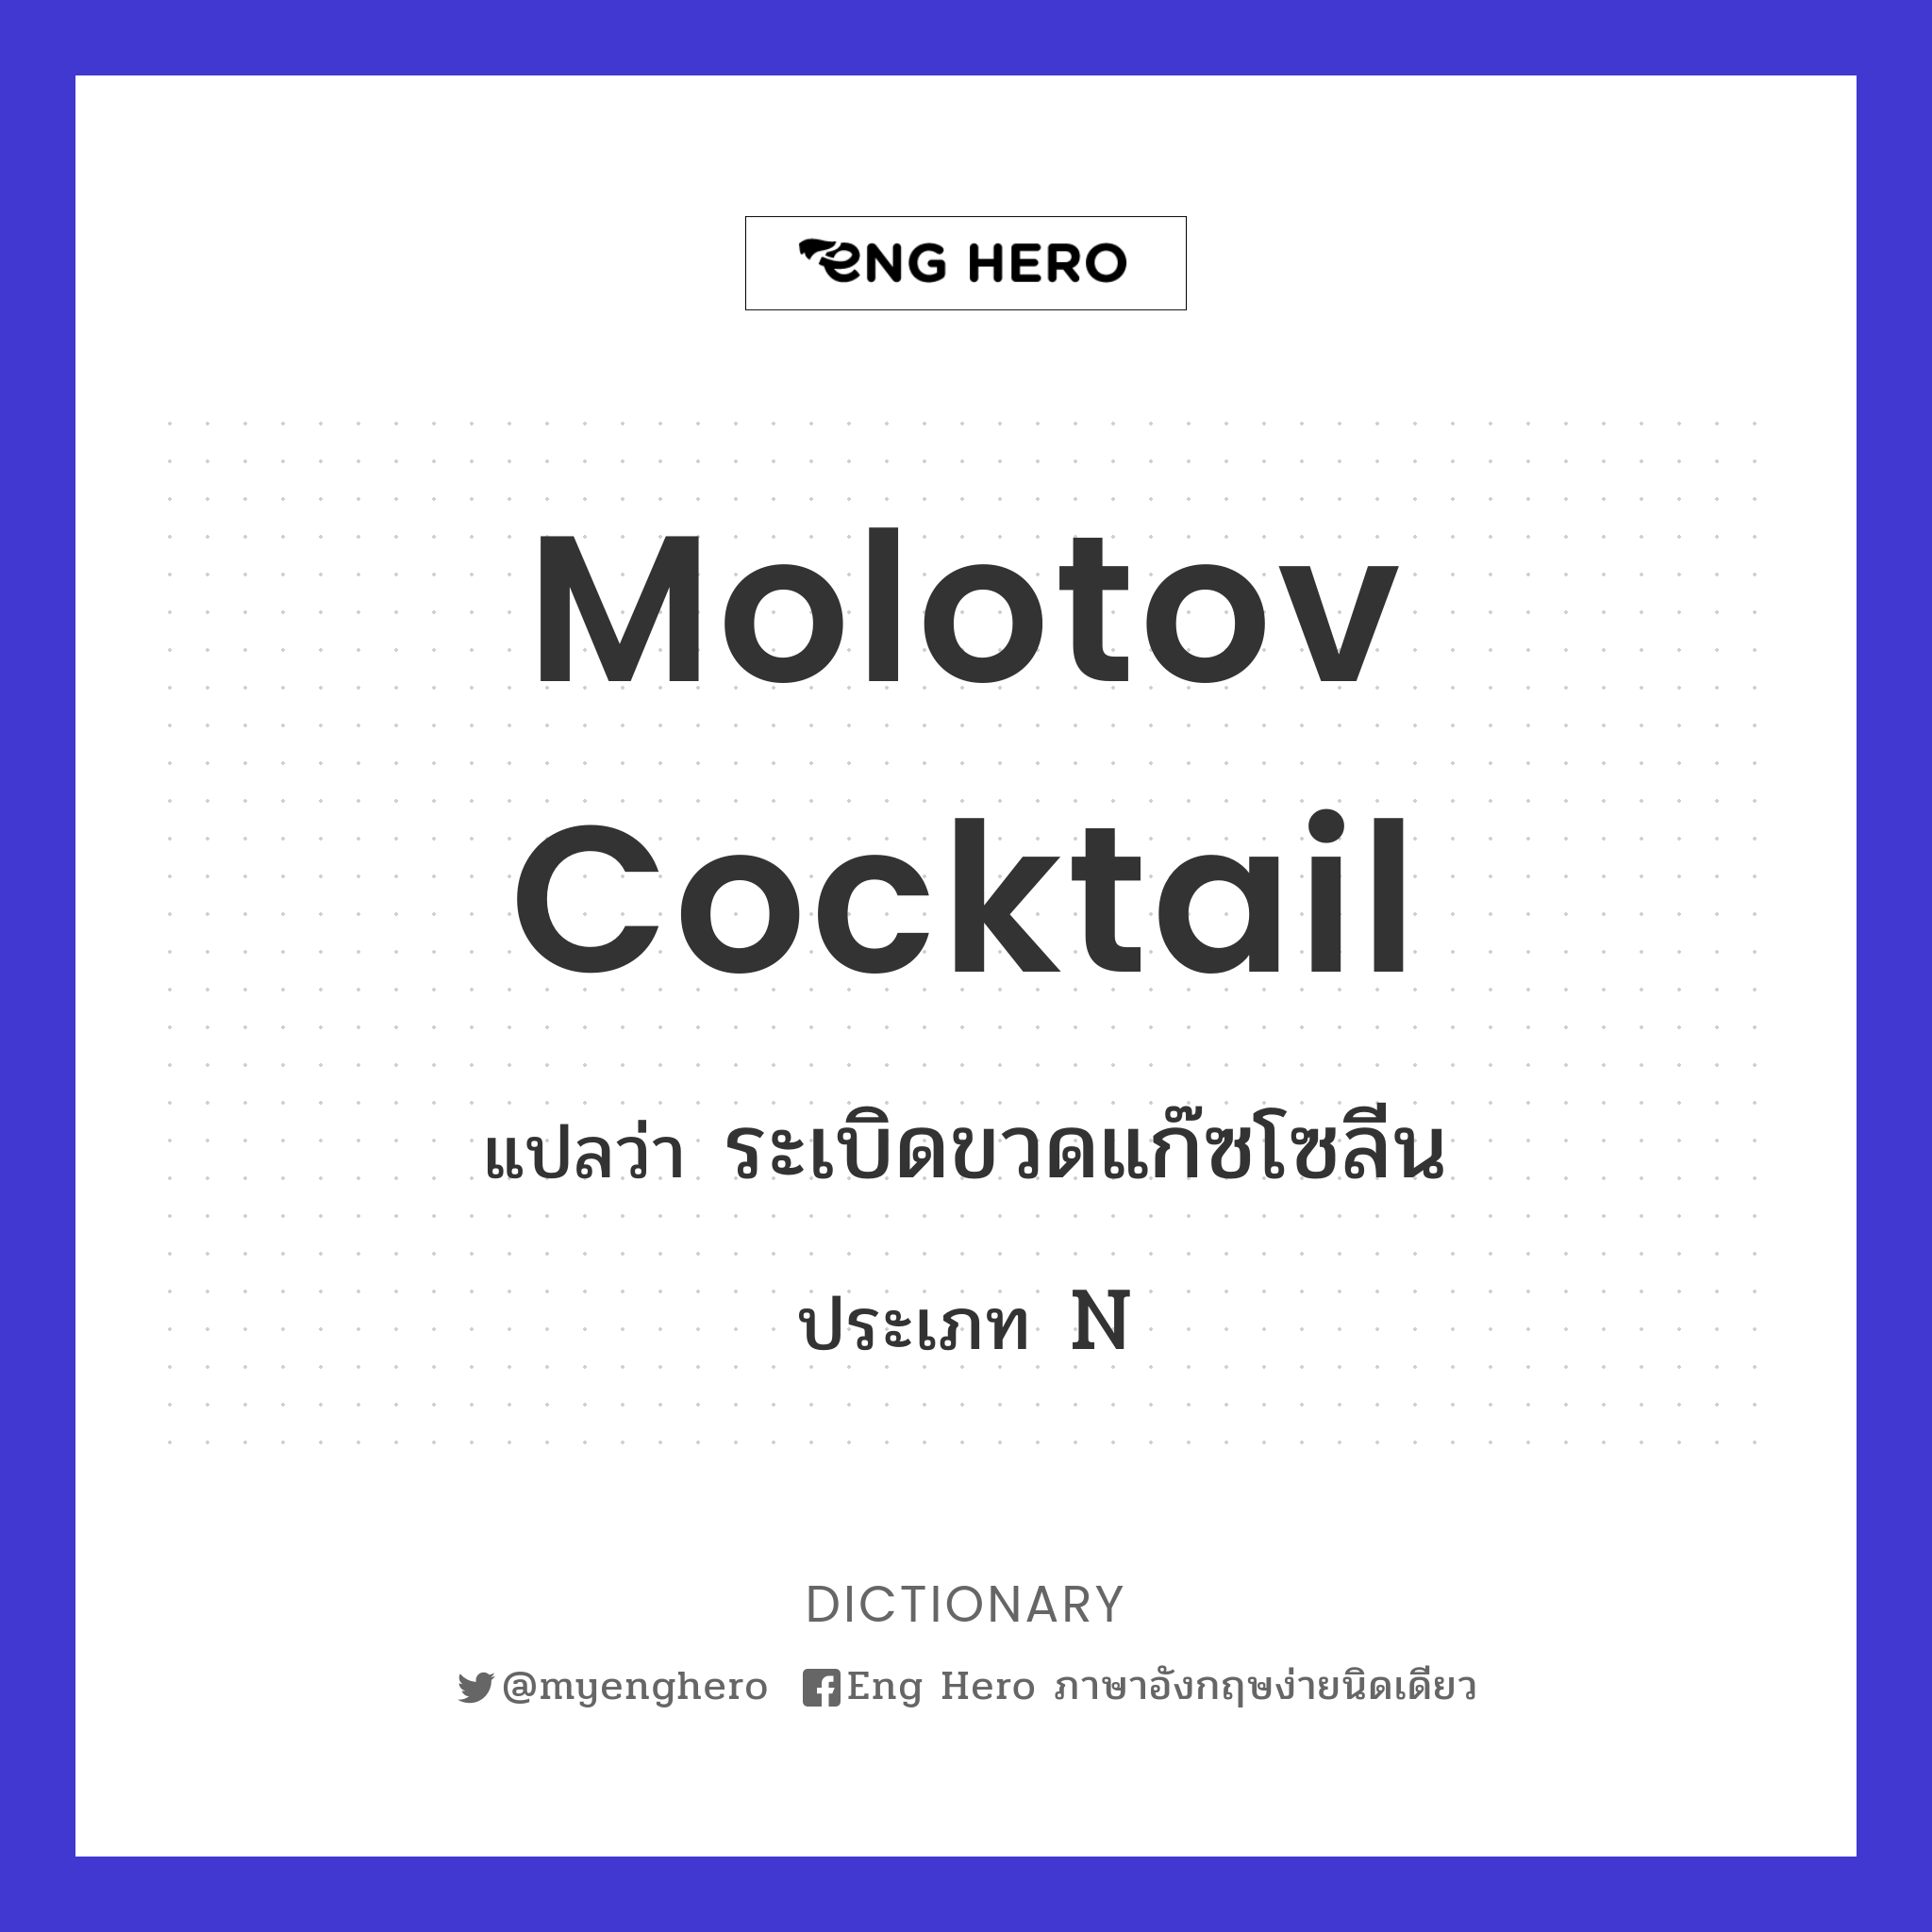 Molotov cocktail